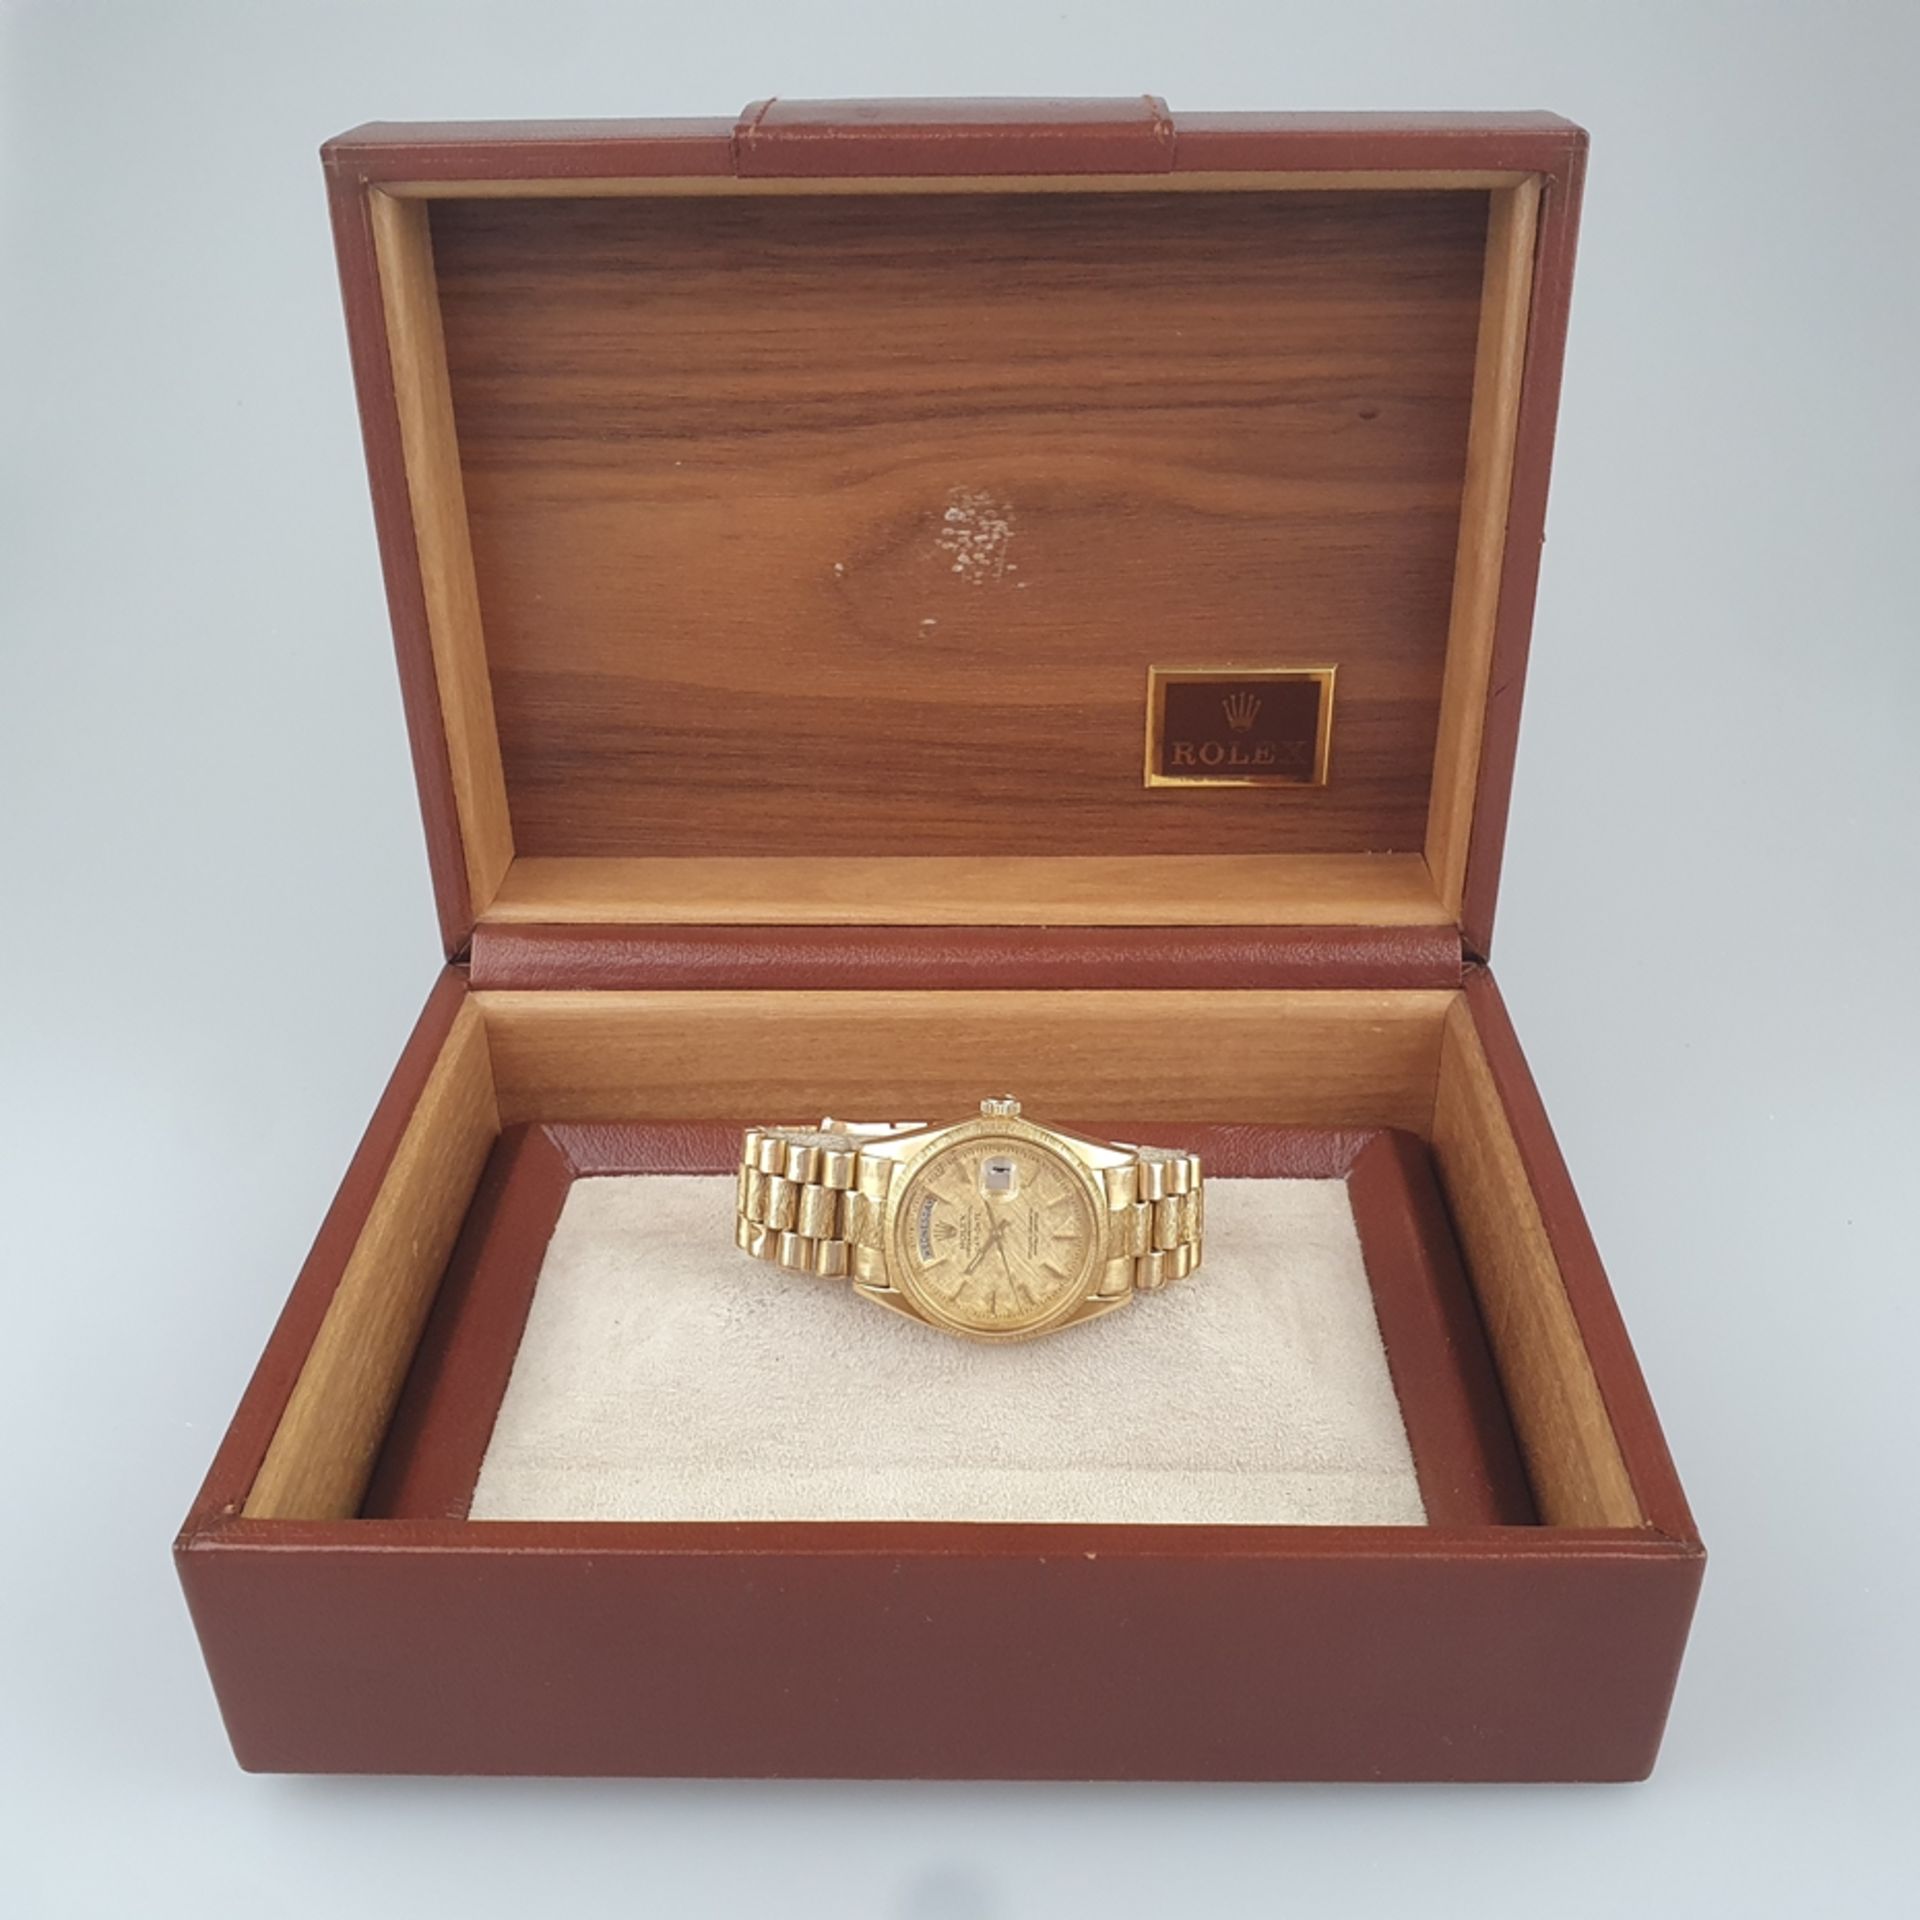 Rolex-Herrenarmbanduhr - "Day-Date", Gehäuse 18K-Gelbgold , 1807 Borke, Automatik, goldfarbenes Zif - Image 8 of 9